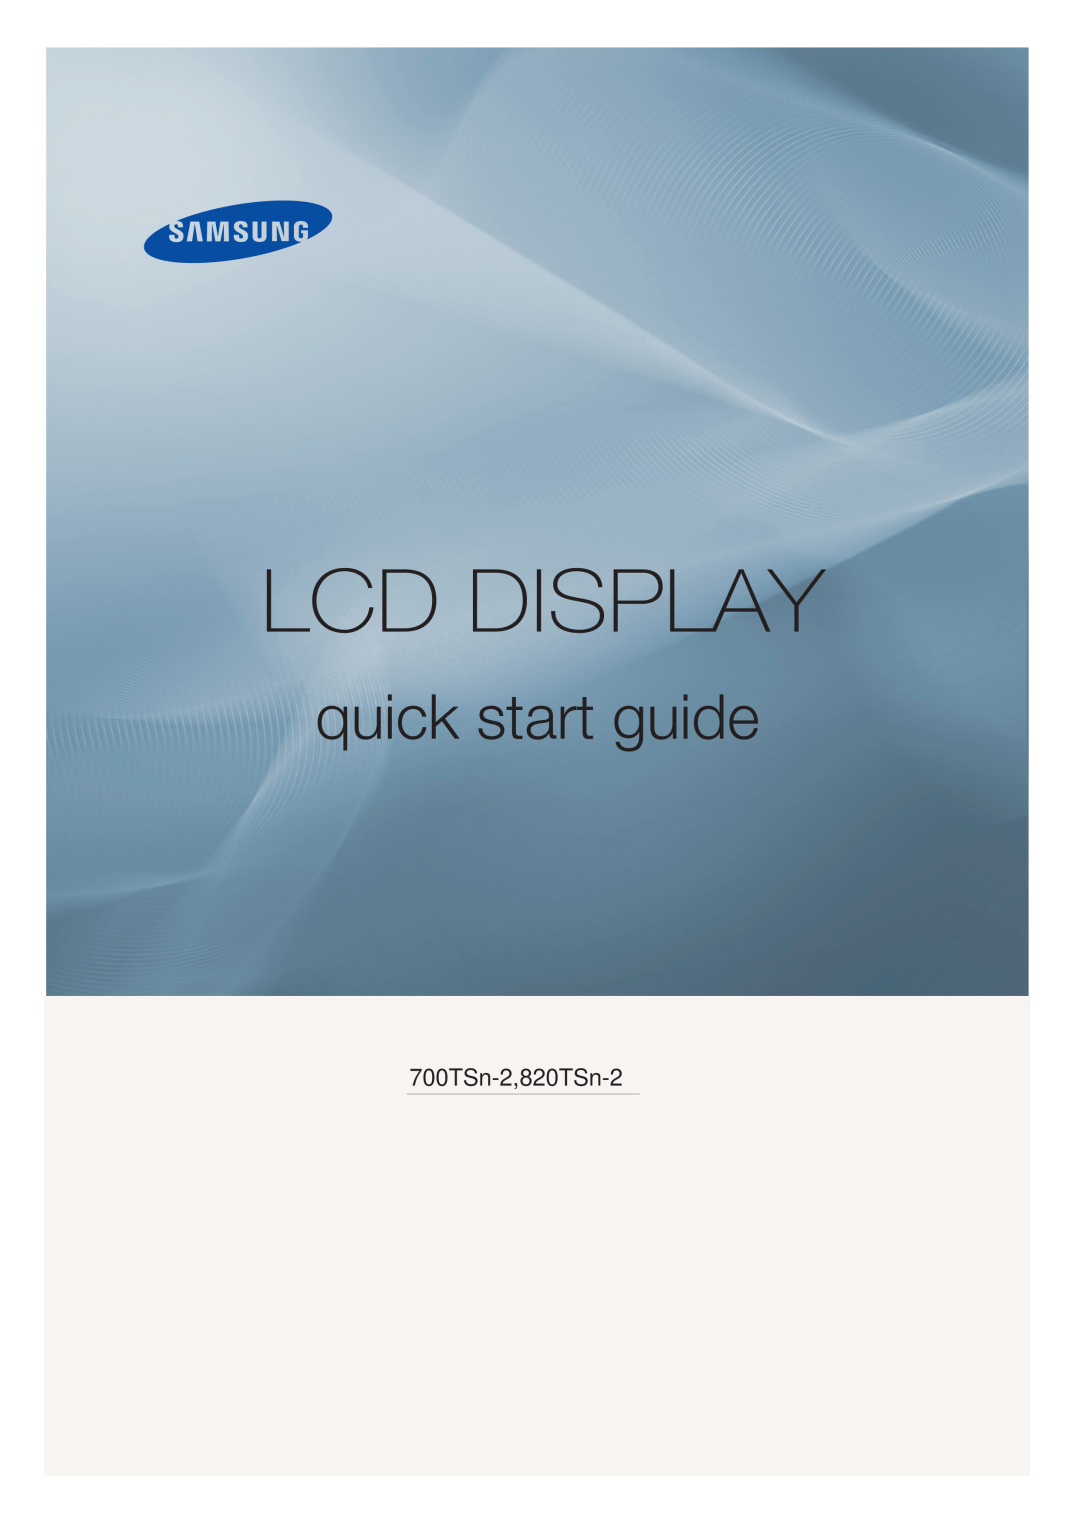 Samsung LH82TCUMBG/EN, LH70TCUMBG/EN, LH70TCSMBG/EN manual SyncMaster 700TSn-2 820TSn-2, LCD Display, User Manual 